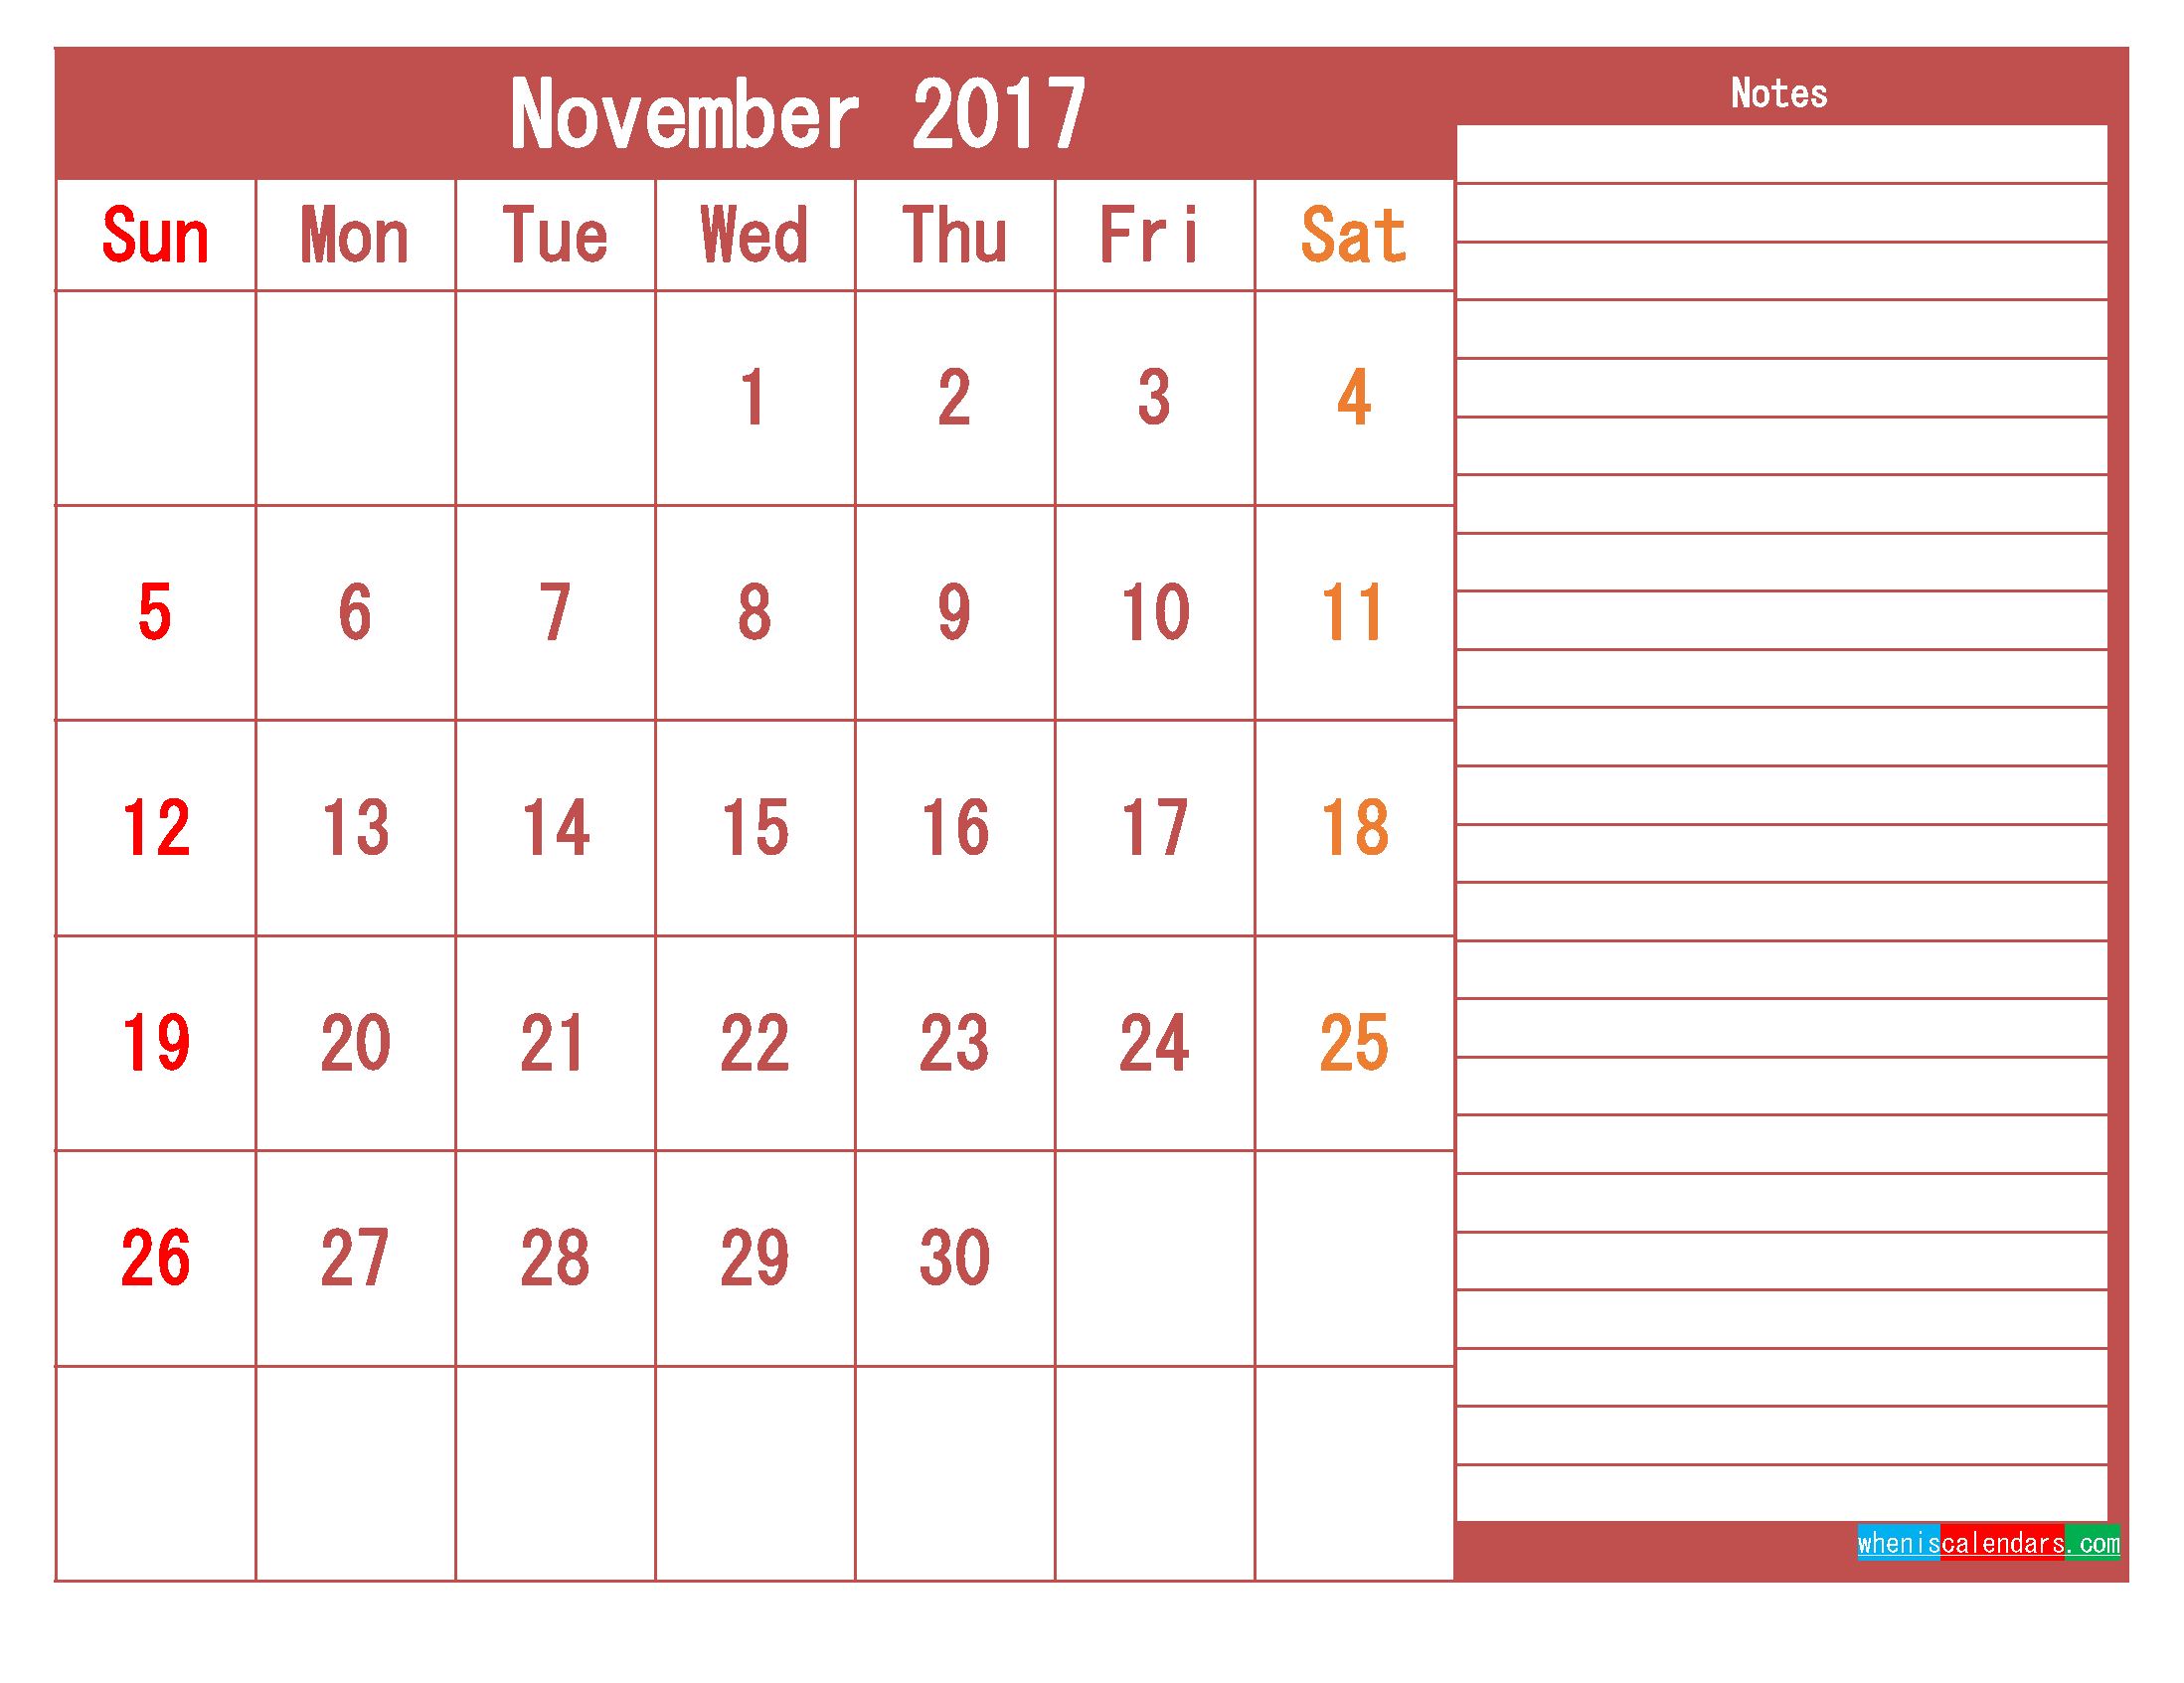 November 2017 Calendar Word November 2017 Word Calendar Kqebcj